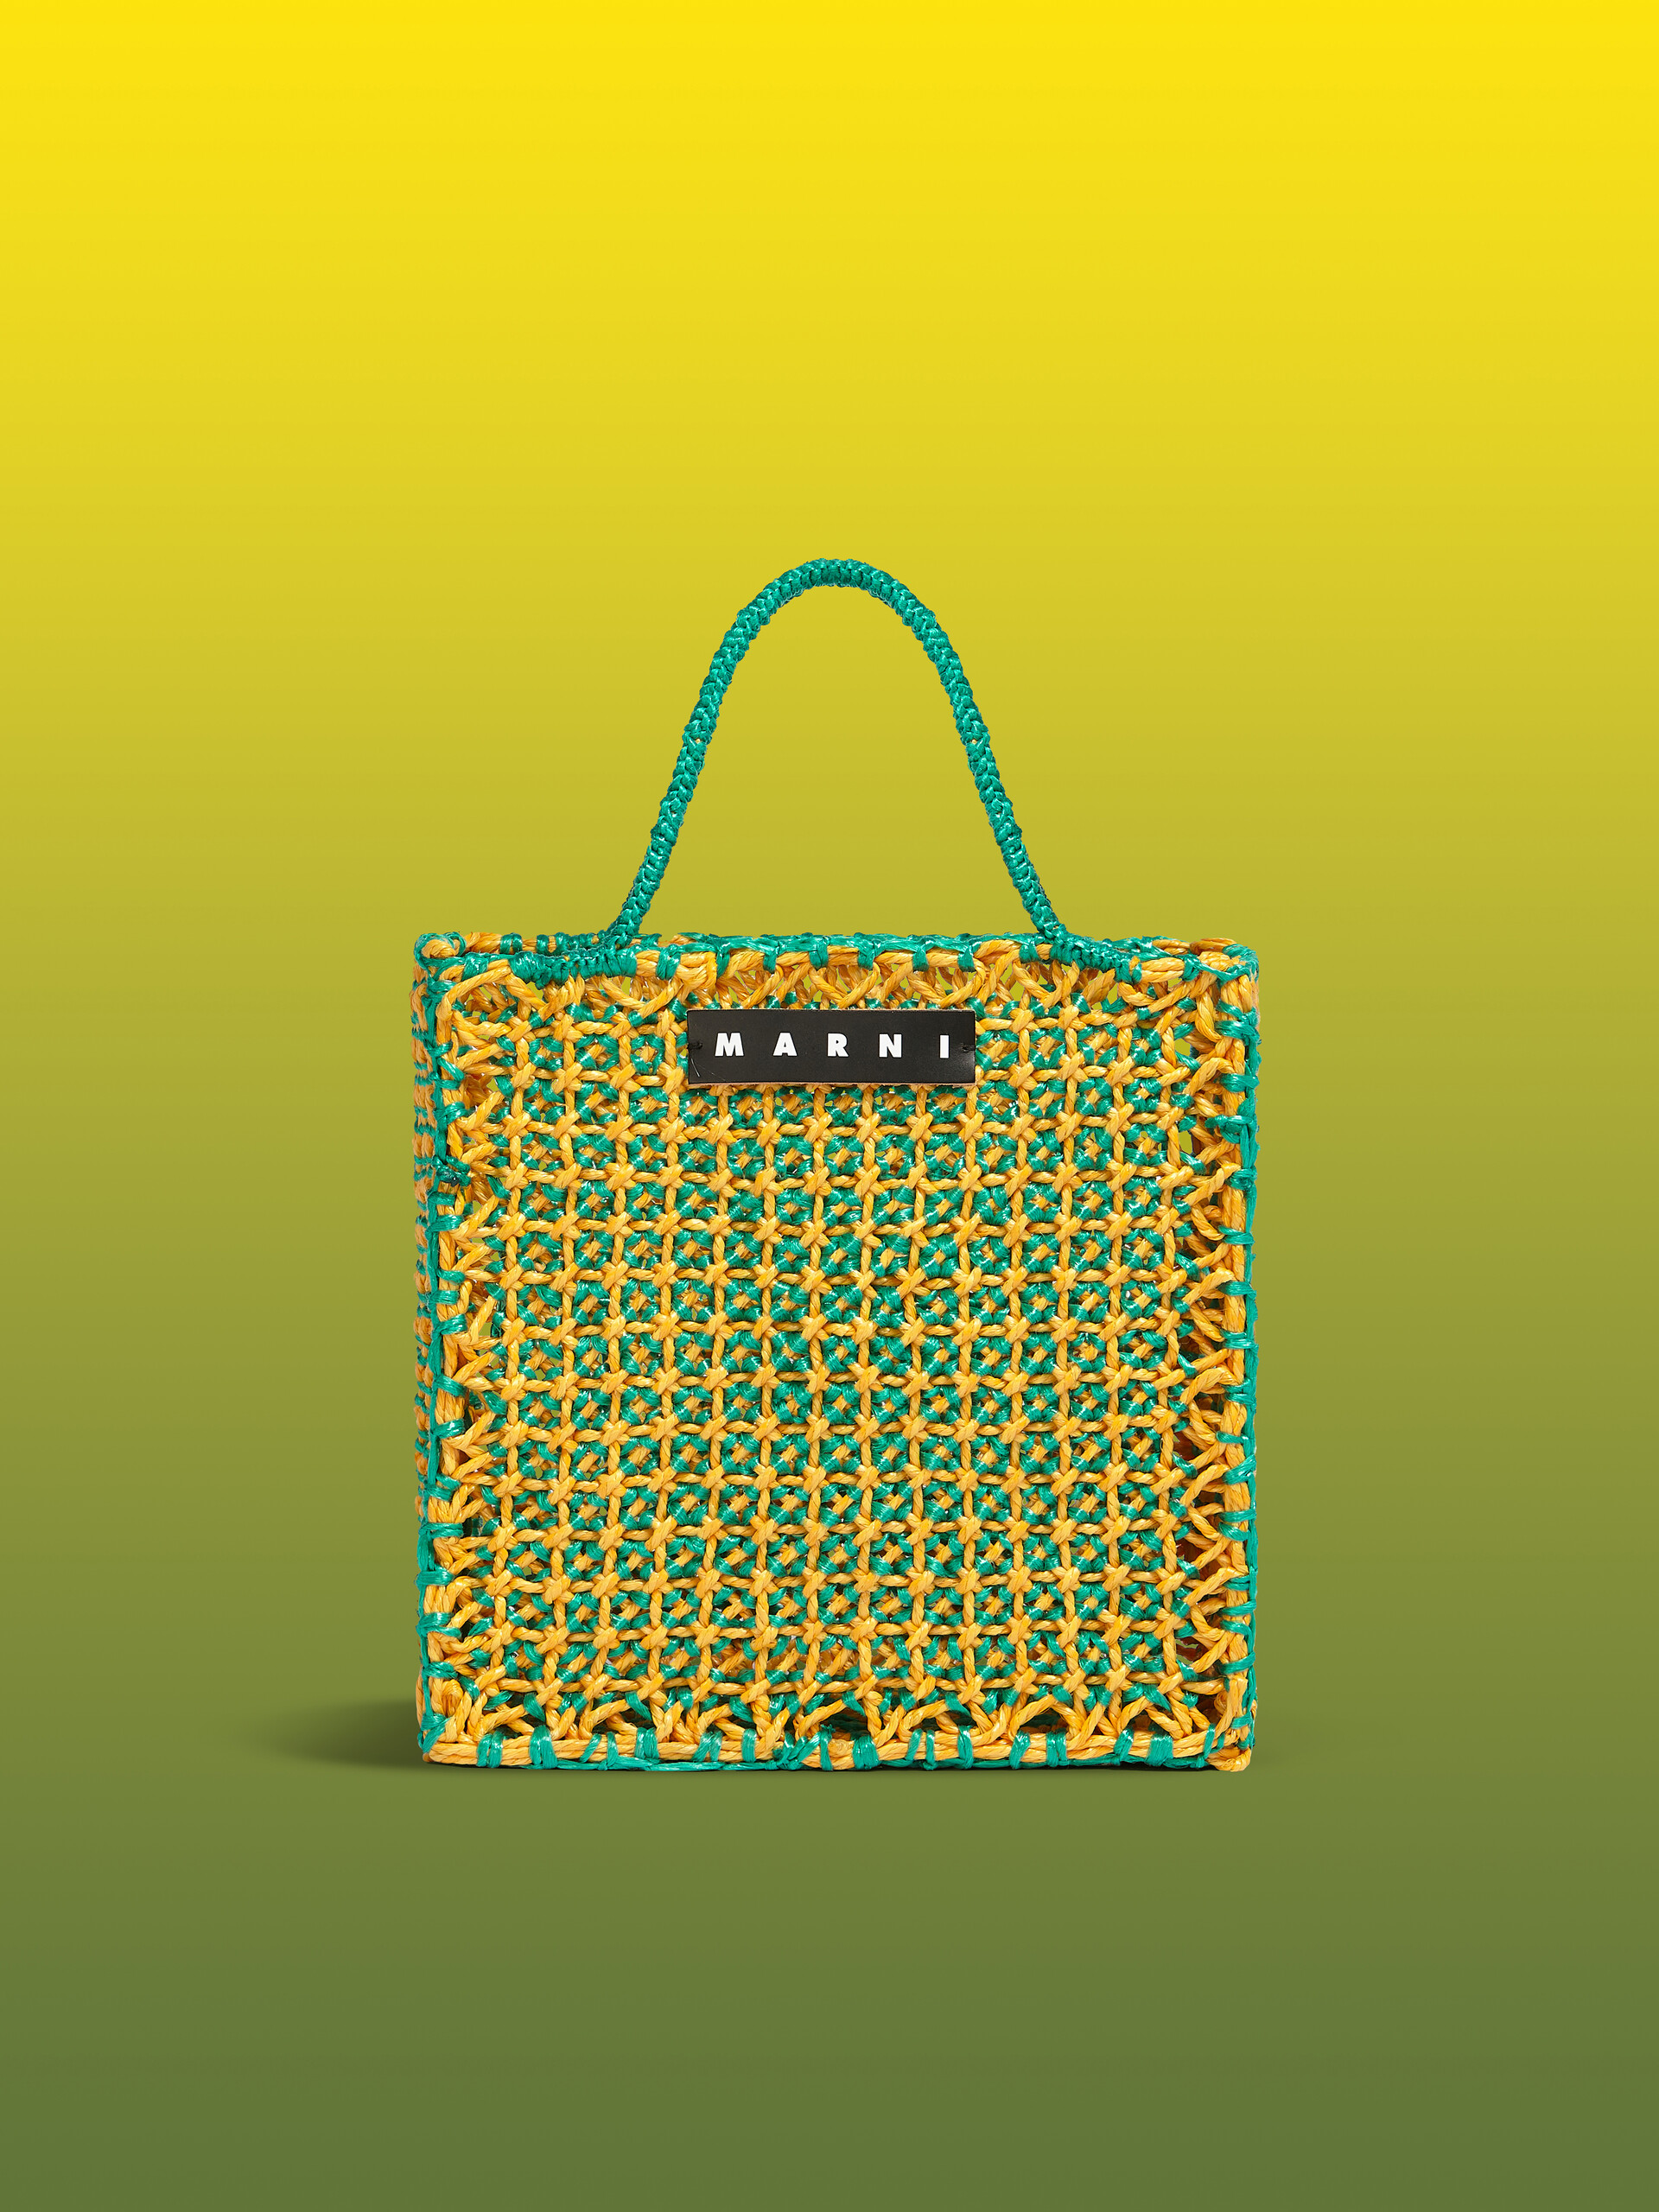 MARNI MARKET JURTA large bag in green and yellow crochet - Shopping Bags - Image 1